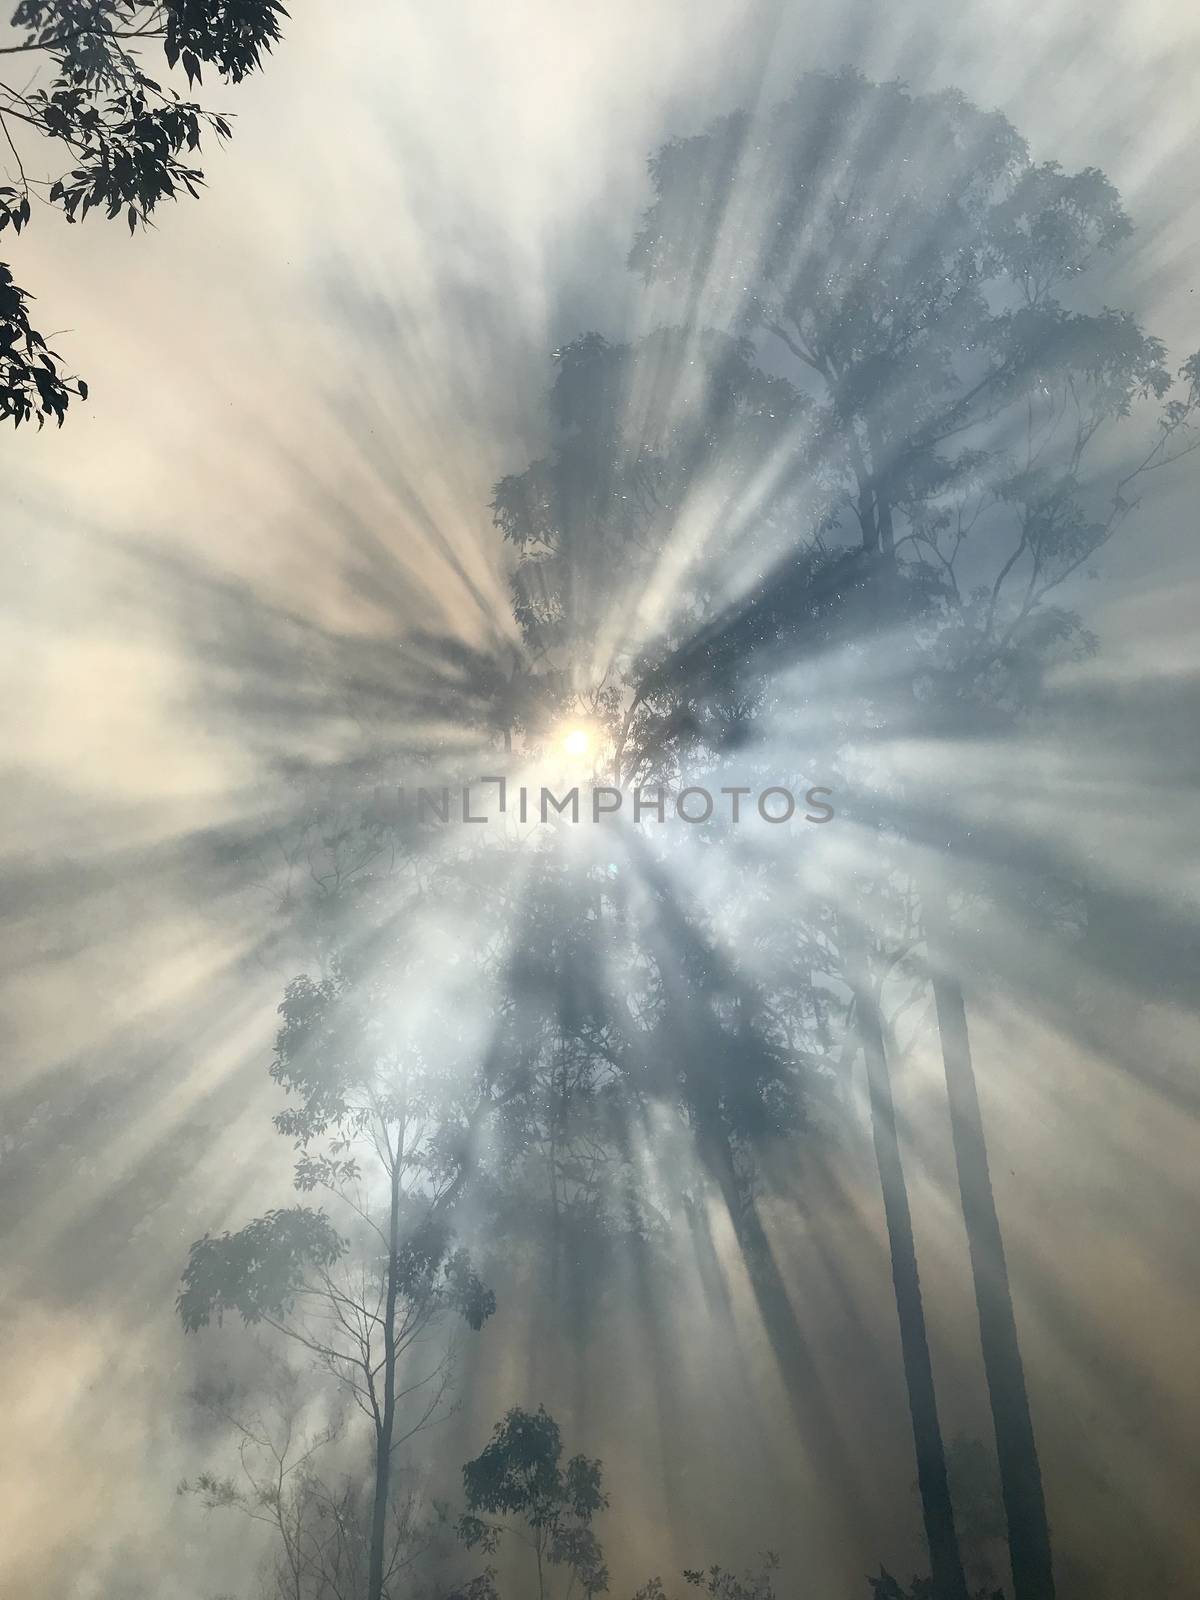 Smoke with sunlight from a bushfire in Australia